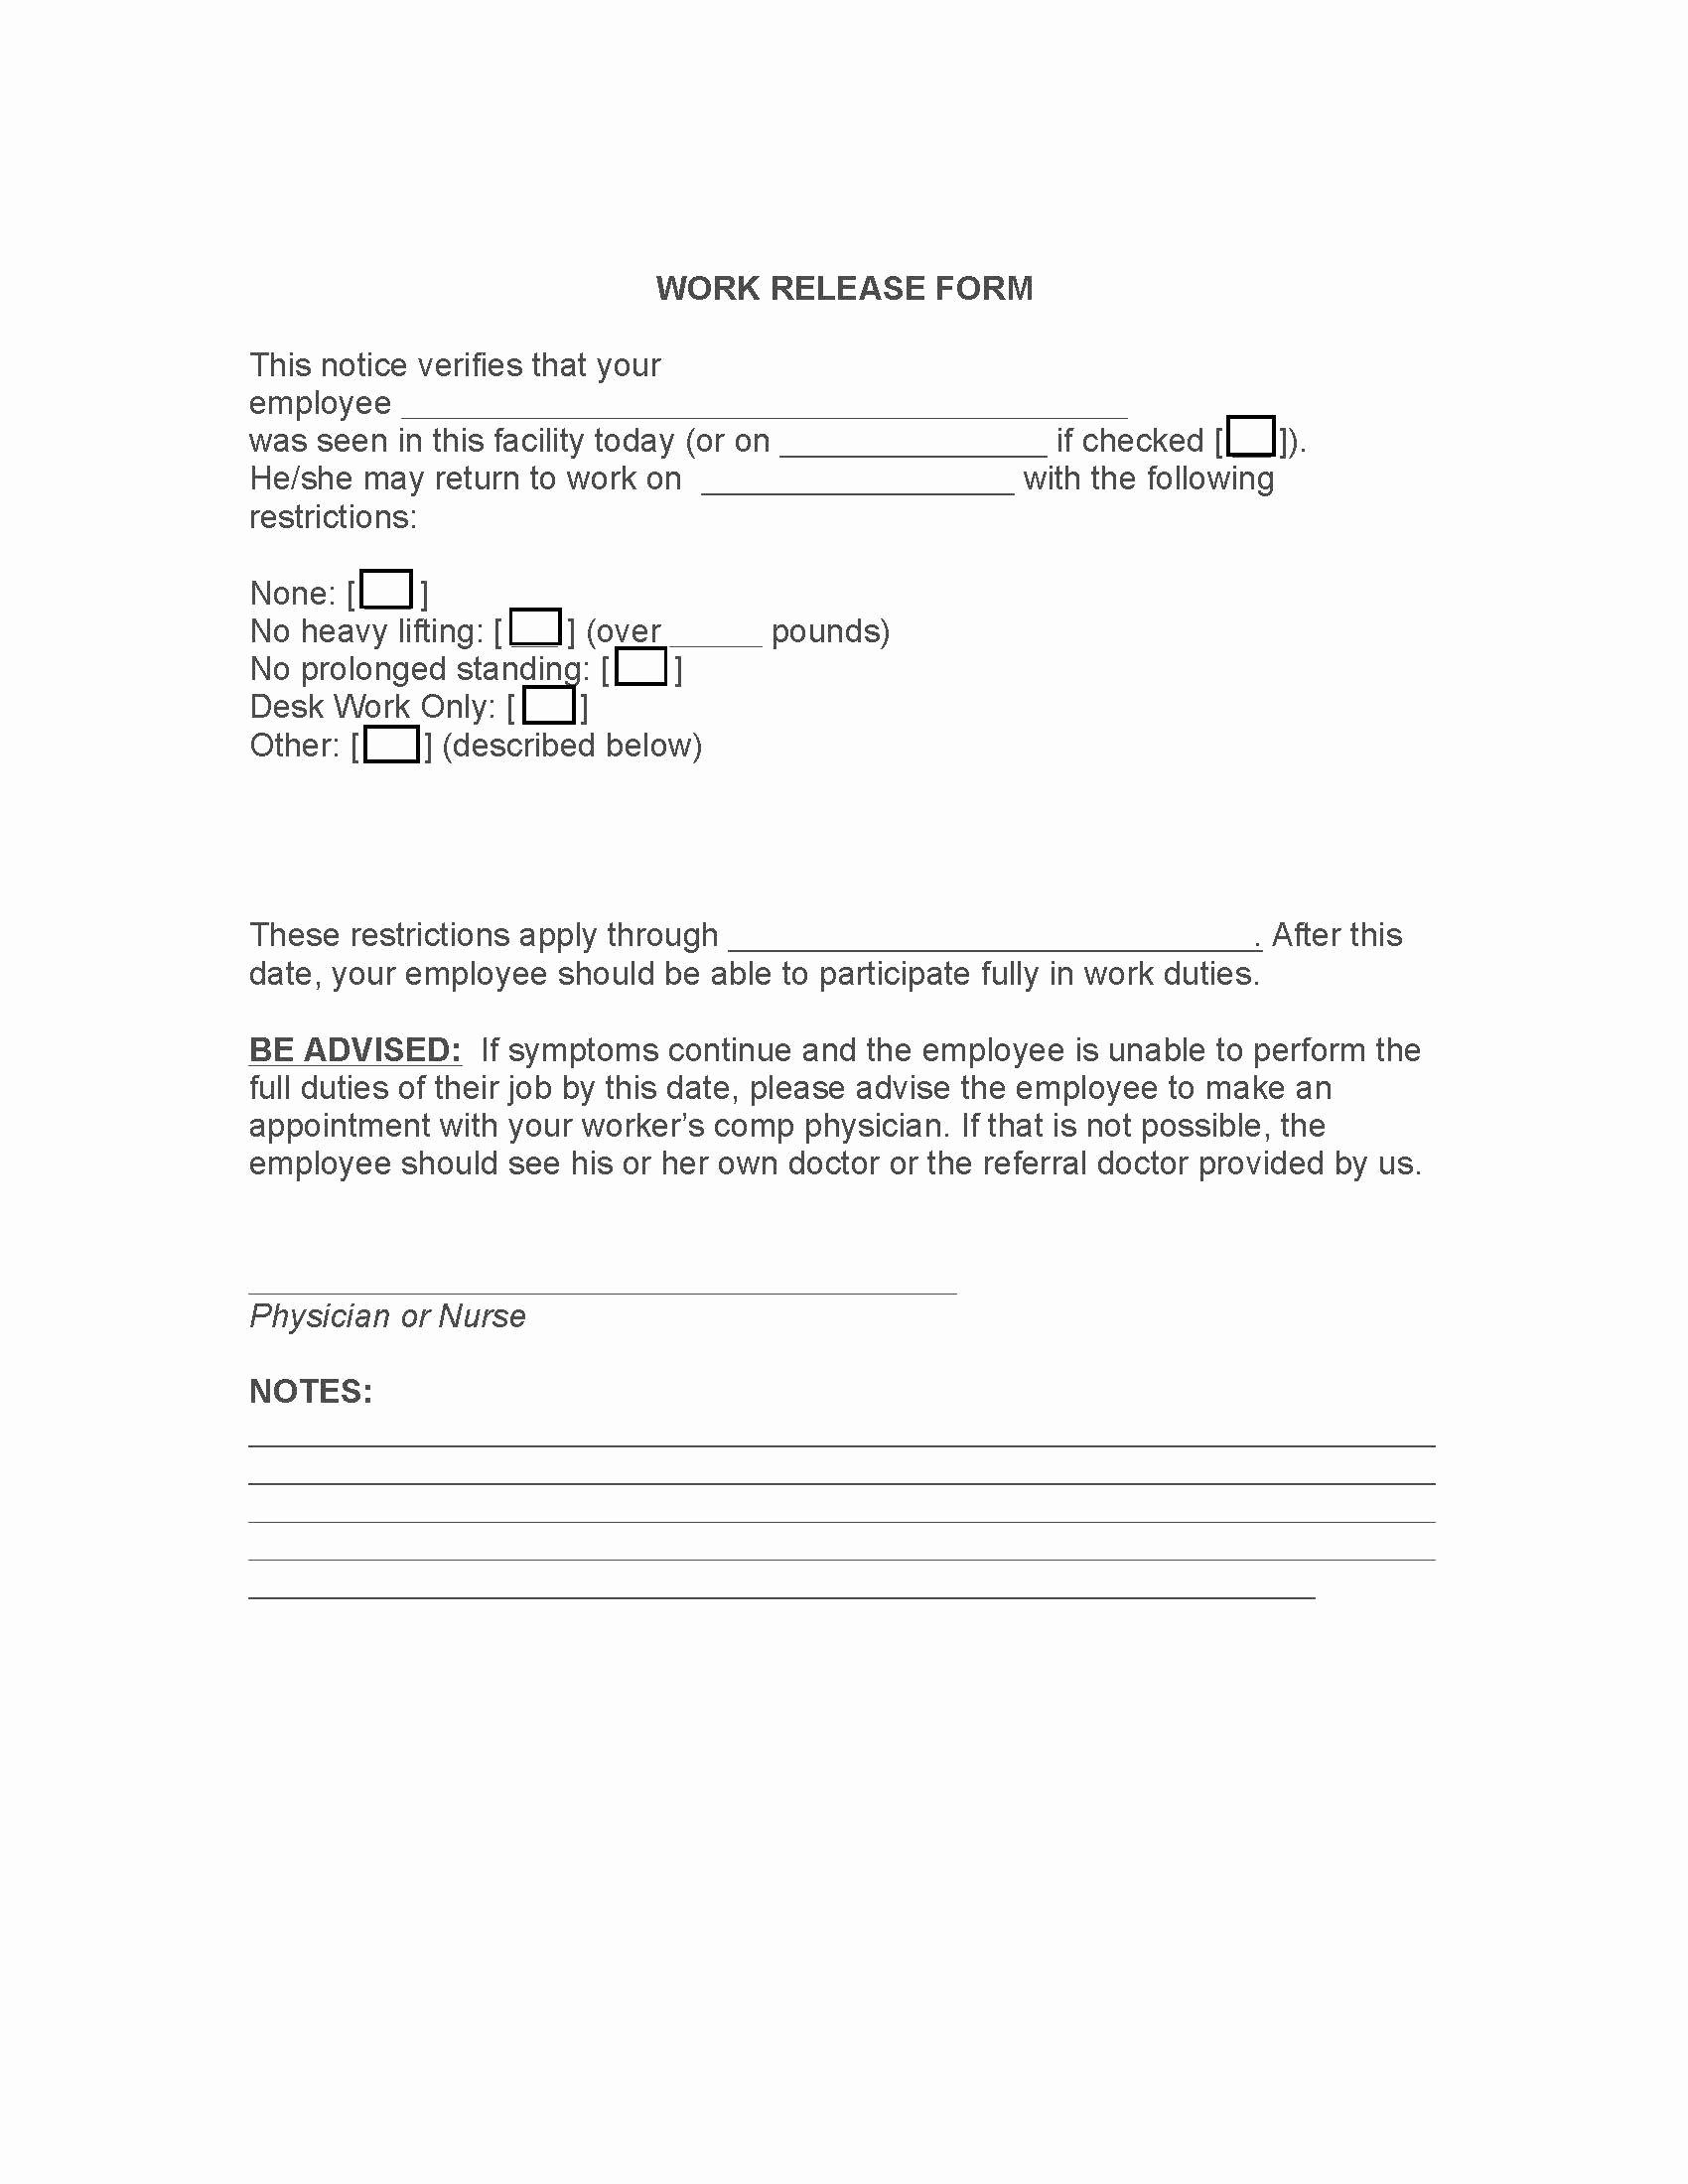 Return to Work Note Elegant Work Release form Release forms Release forms